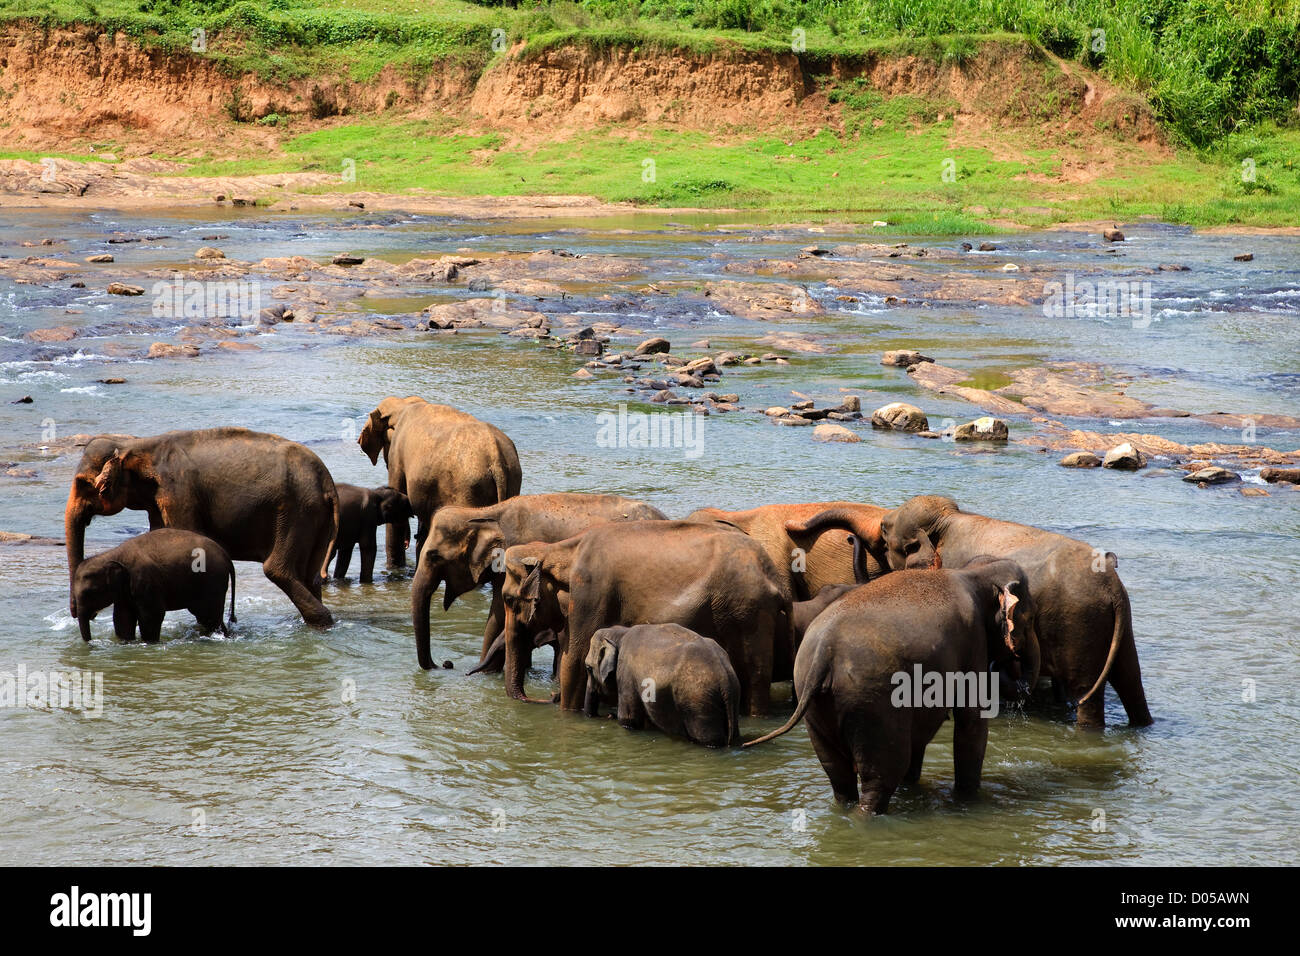 Elephants from the Pinnawala Elephant Orphanage, Kegella, Sri Lanka washing in the local river Stock Photo